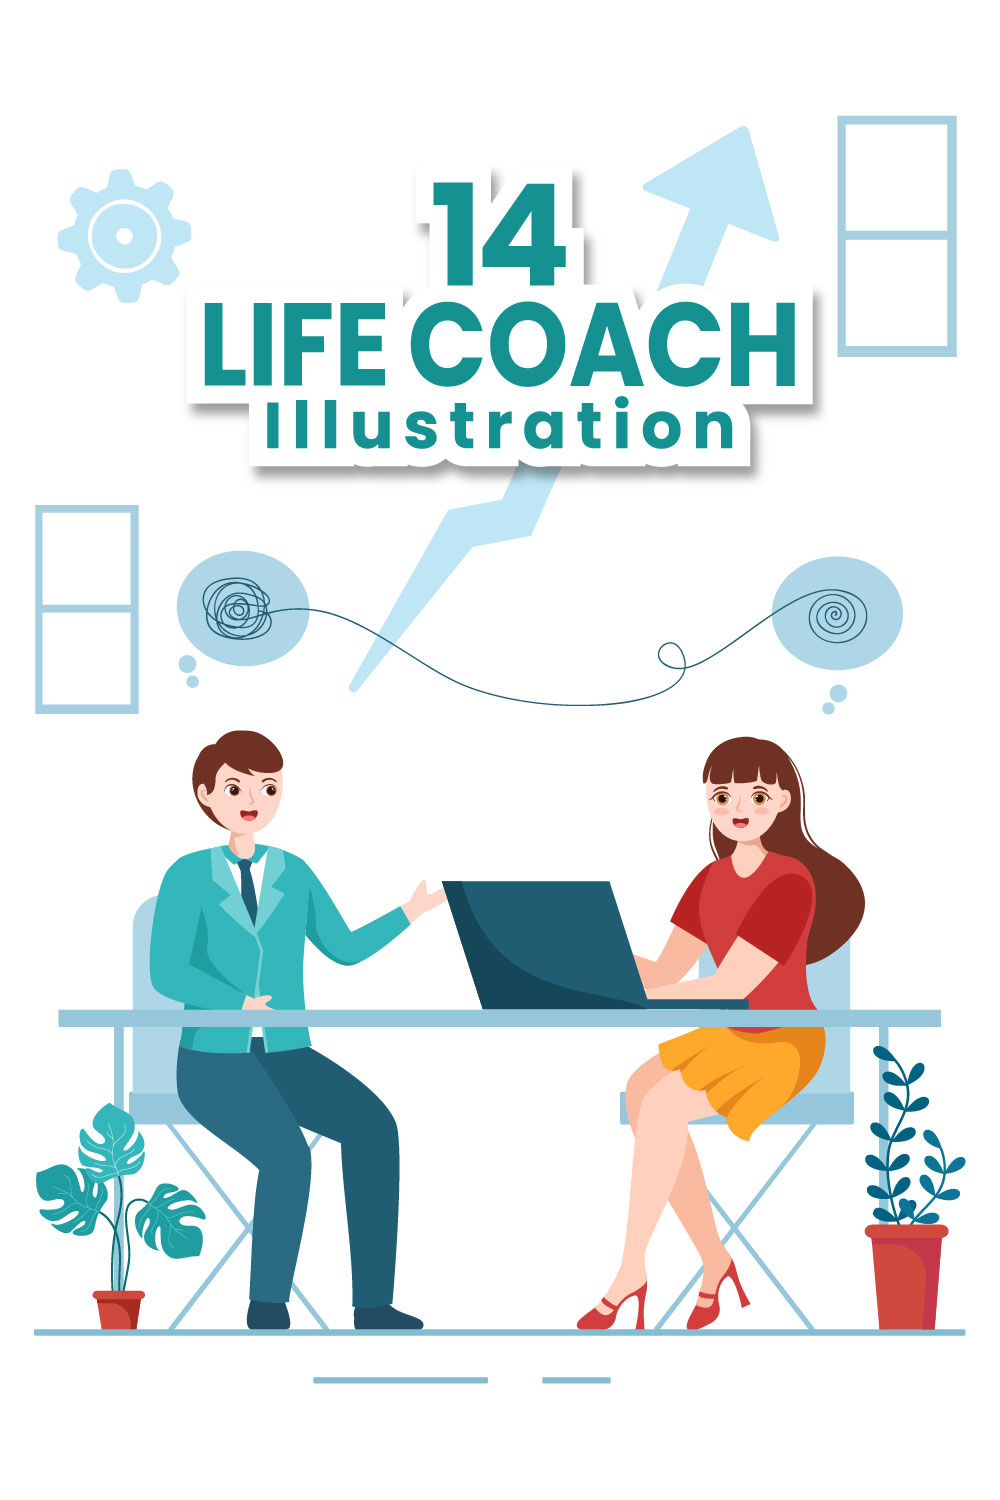 Life Coach Design Illustration pinterest image.